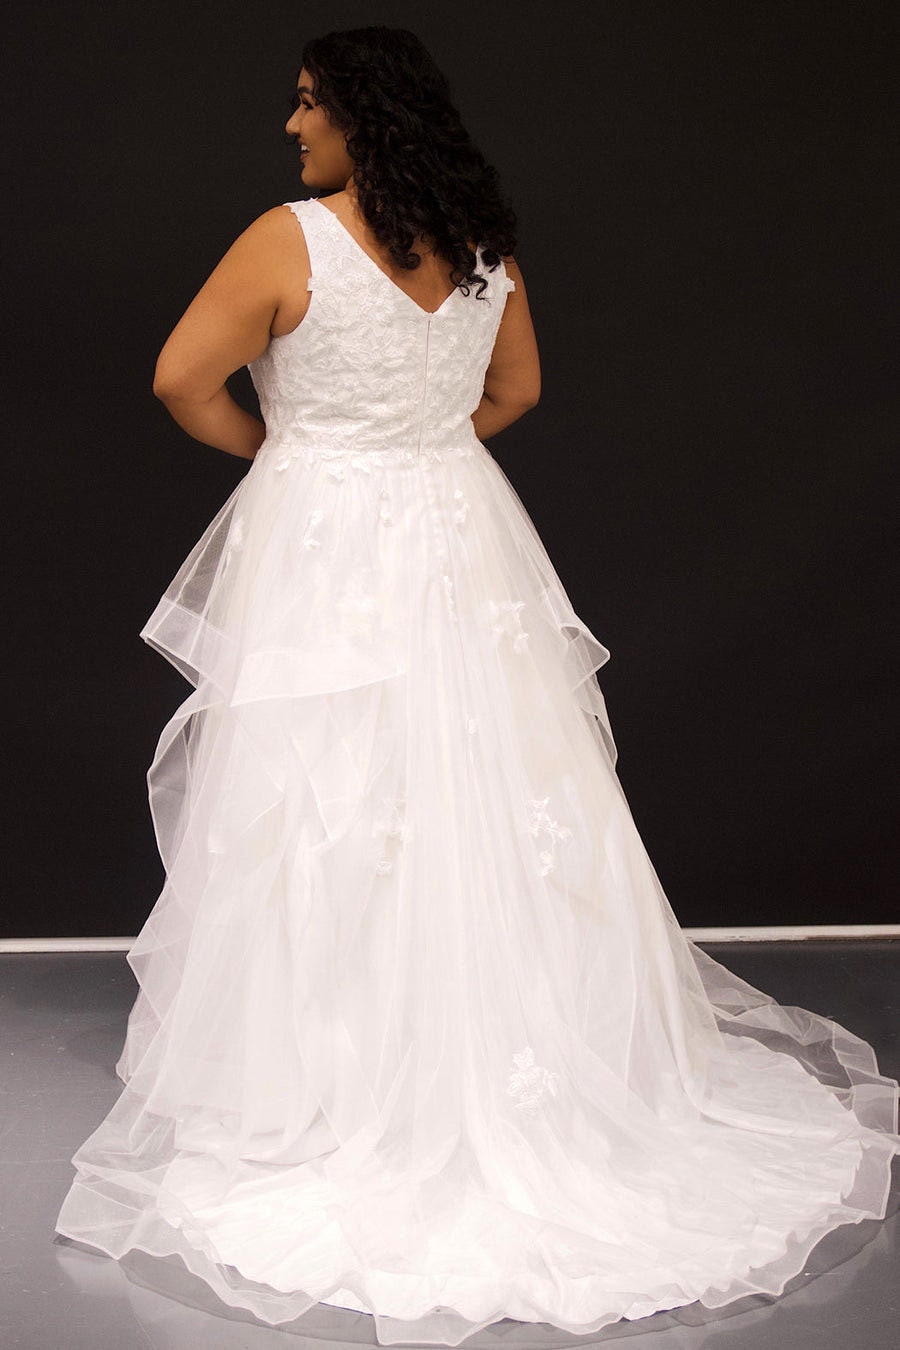 Aline Plus Size Wedding Dress Bridal Gown V Neckline Tiered Tulle Skirt Bridal Black or Ivory Options lace Bodice Bra Friendly Straps